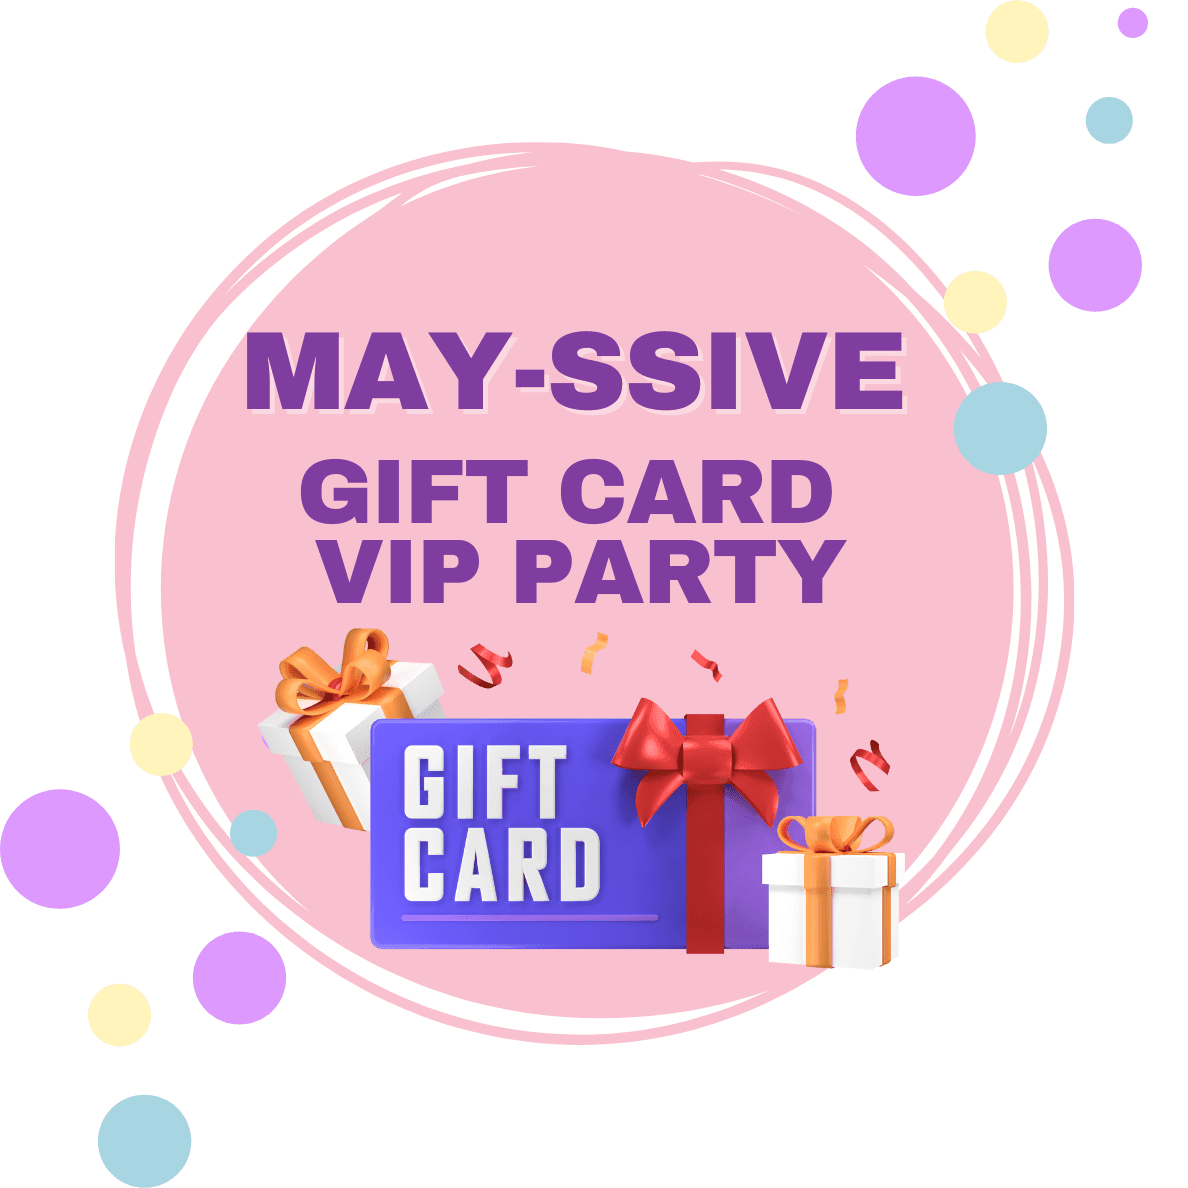 May-ssive Gift Card VIP Party